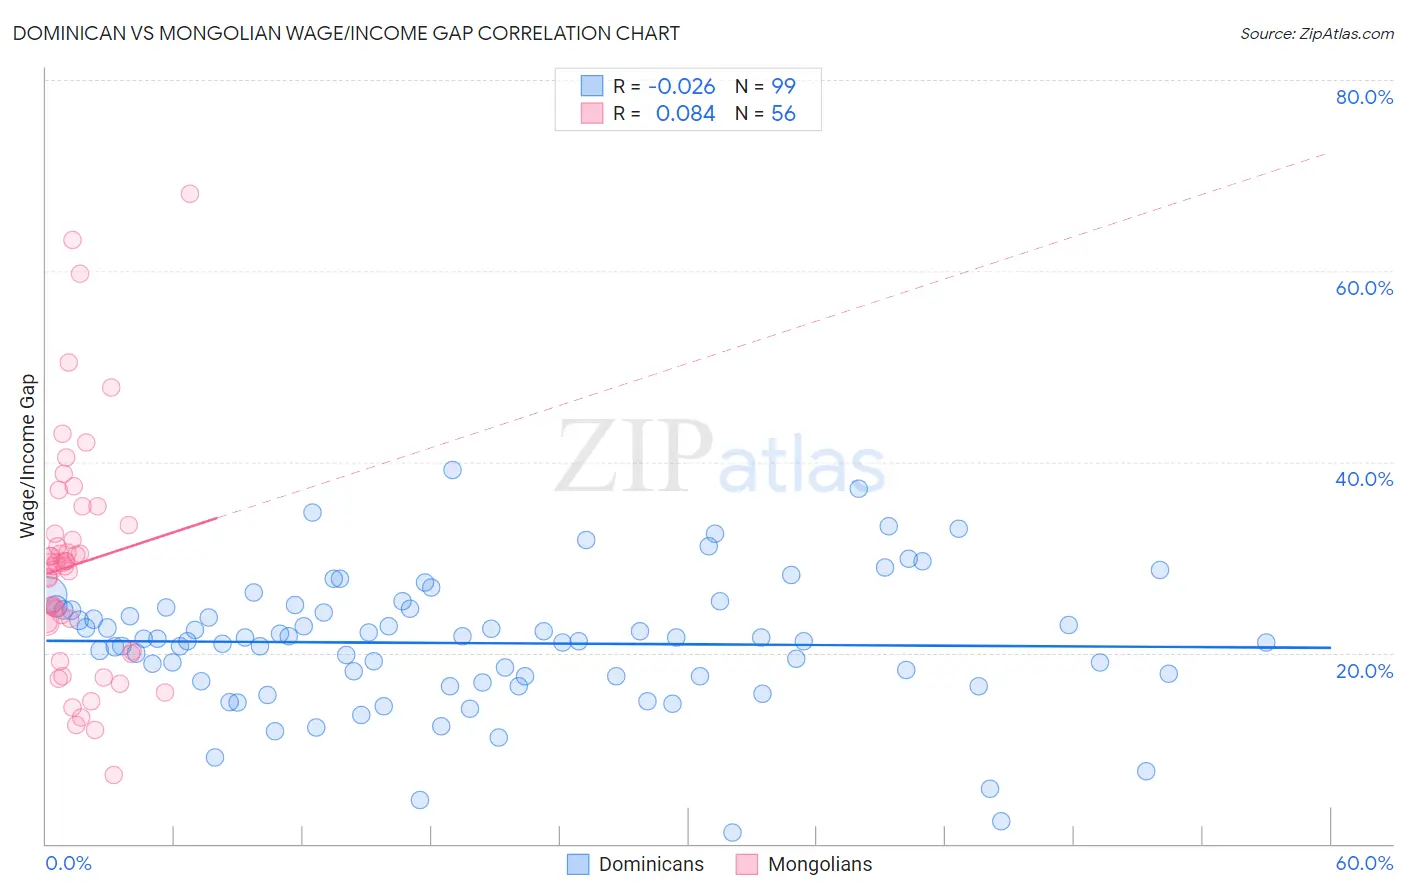 Dominican vs Mongolian Wage/Income Gap